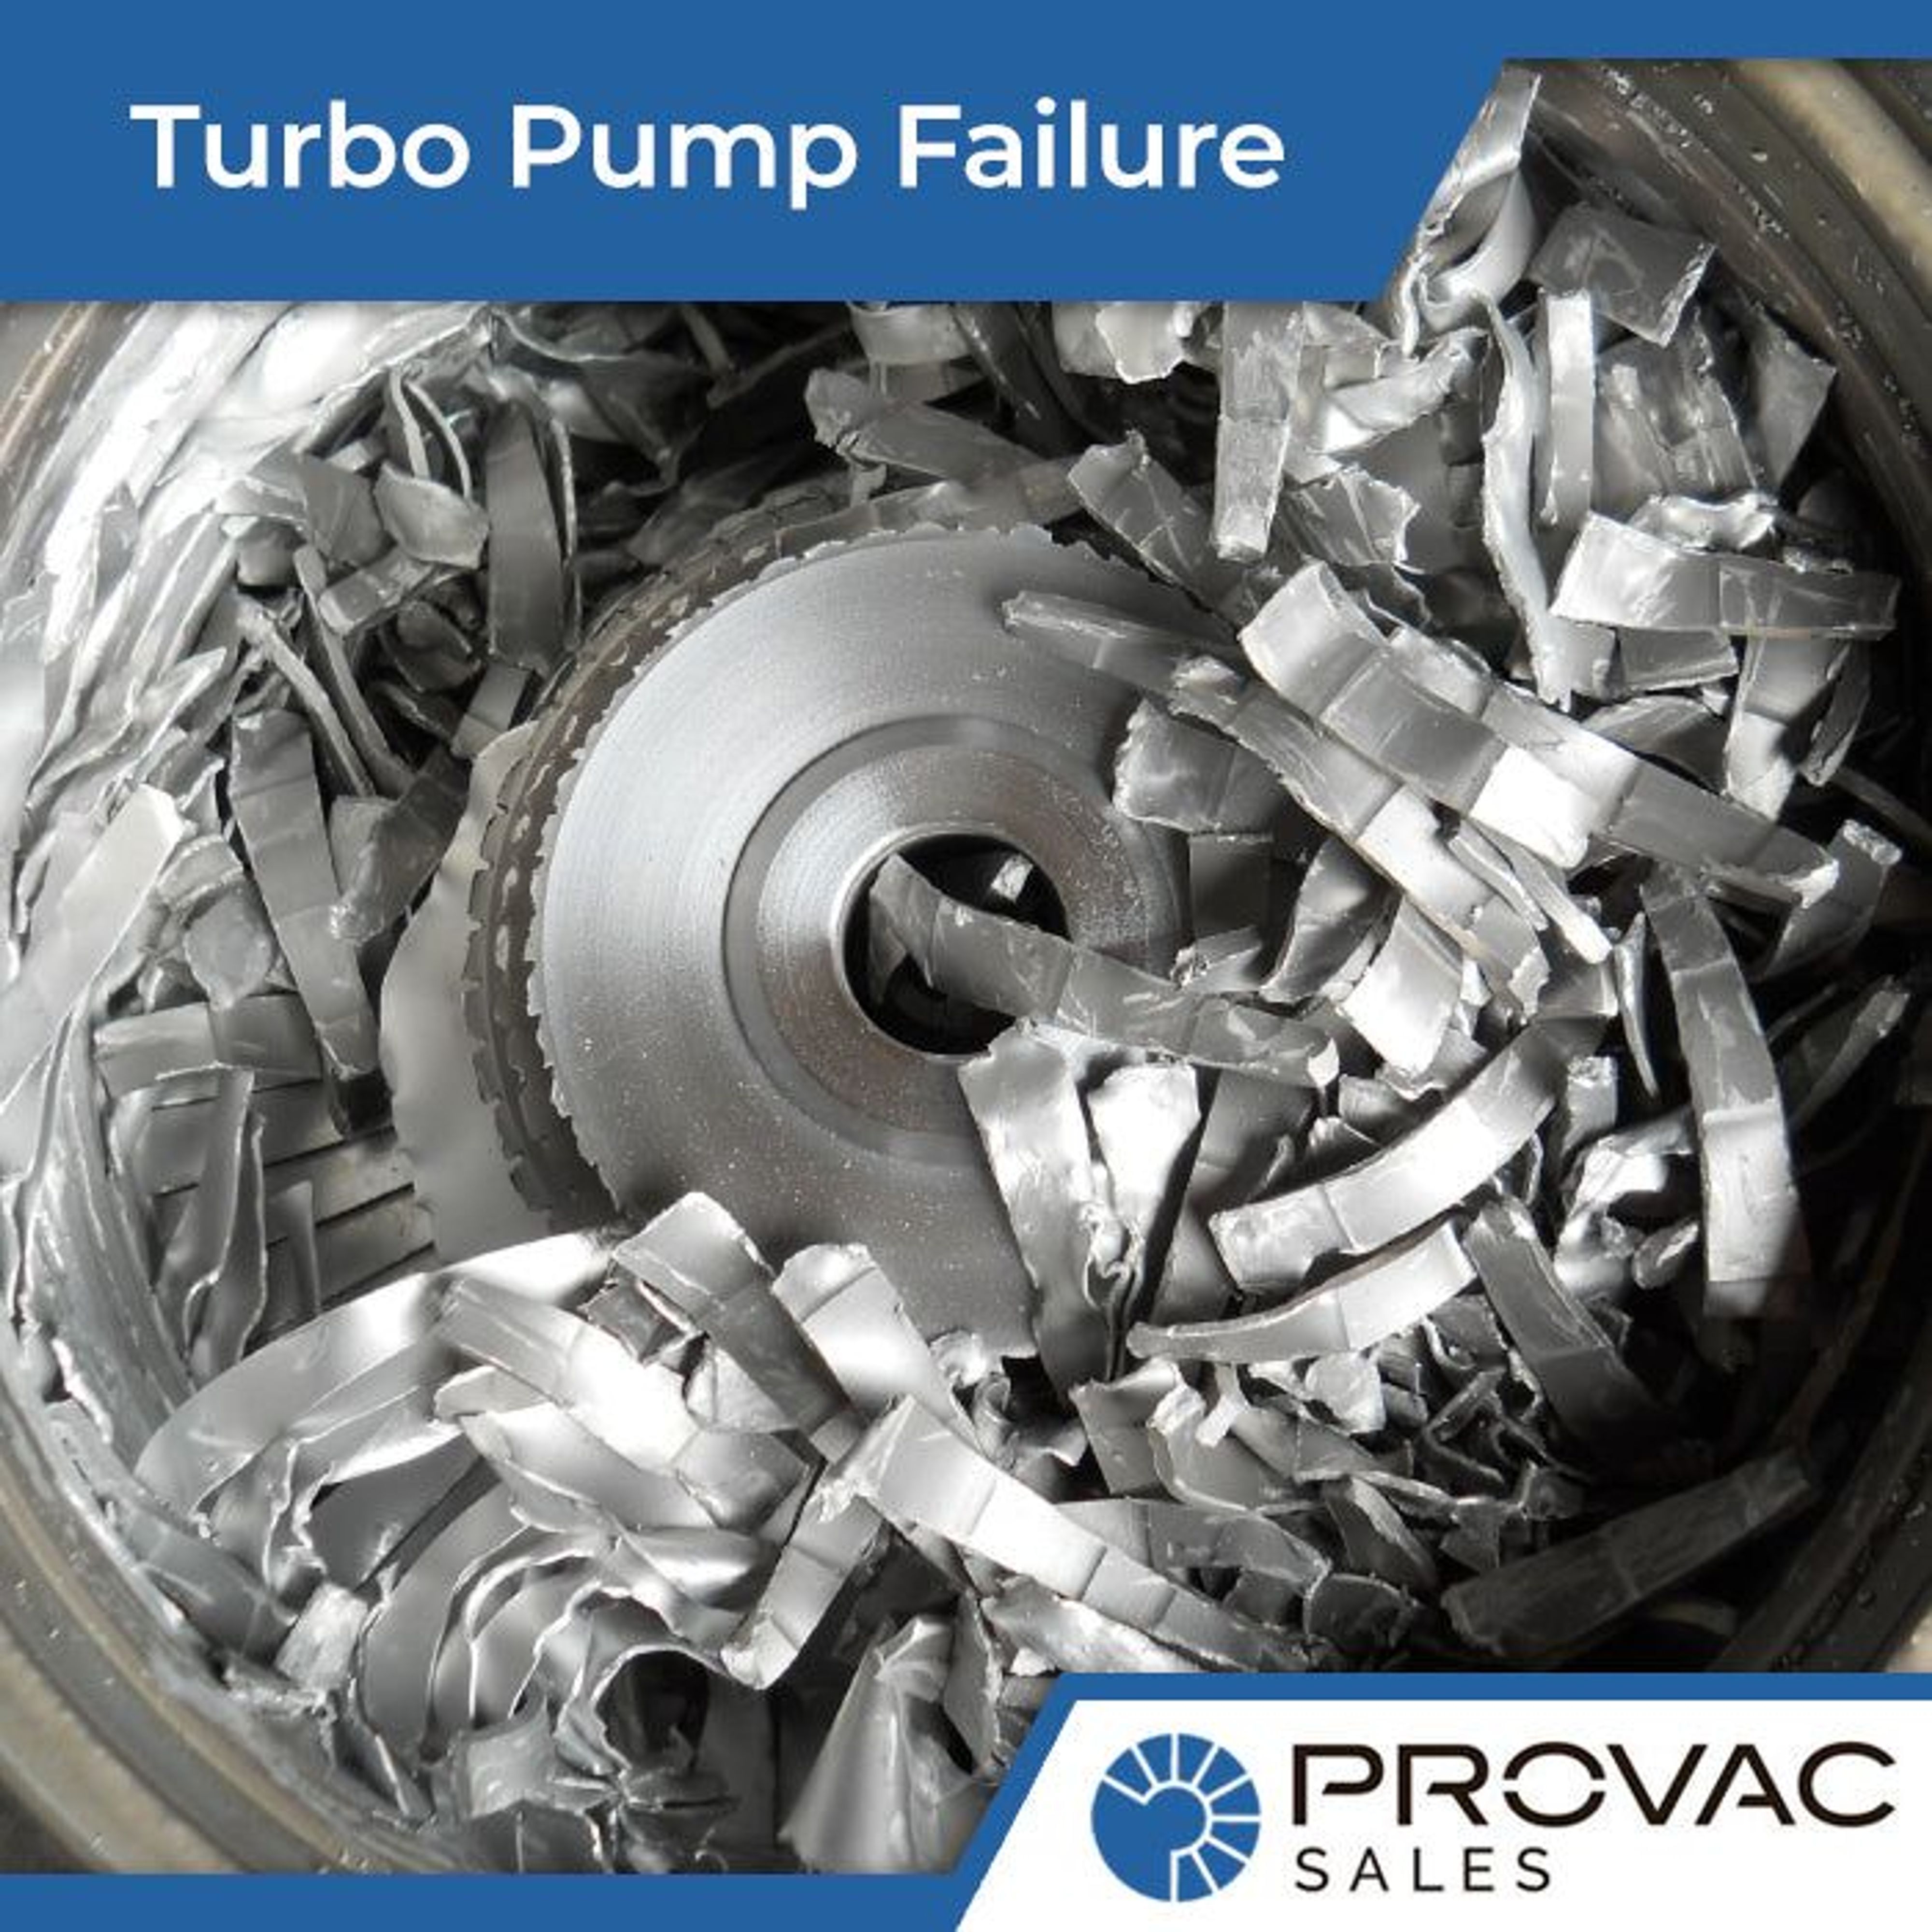 Turbo Pump Failure Background